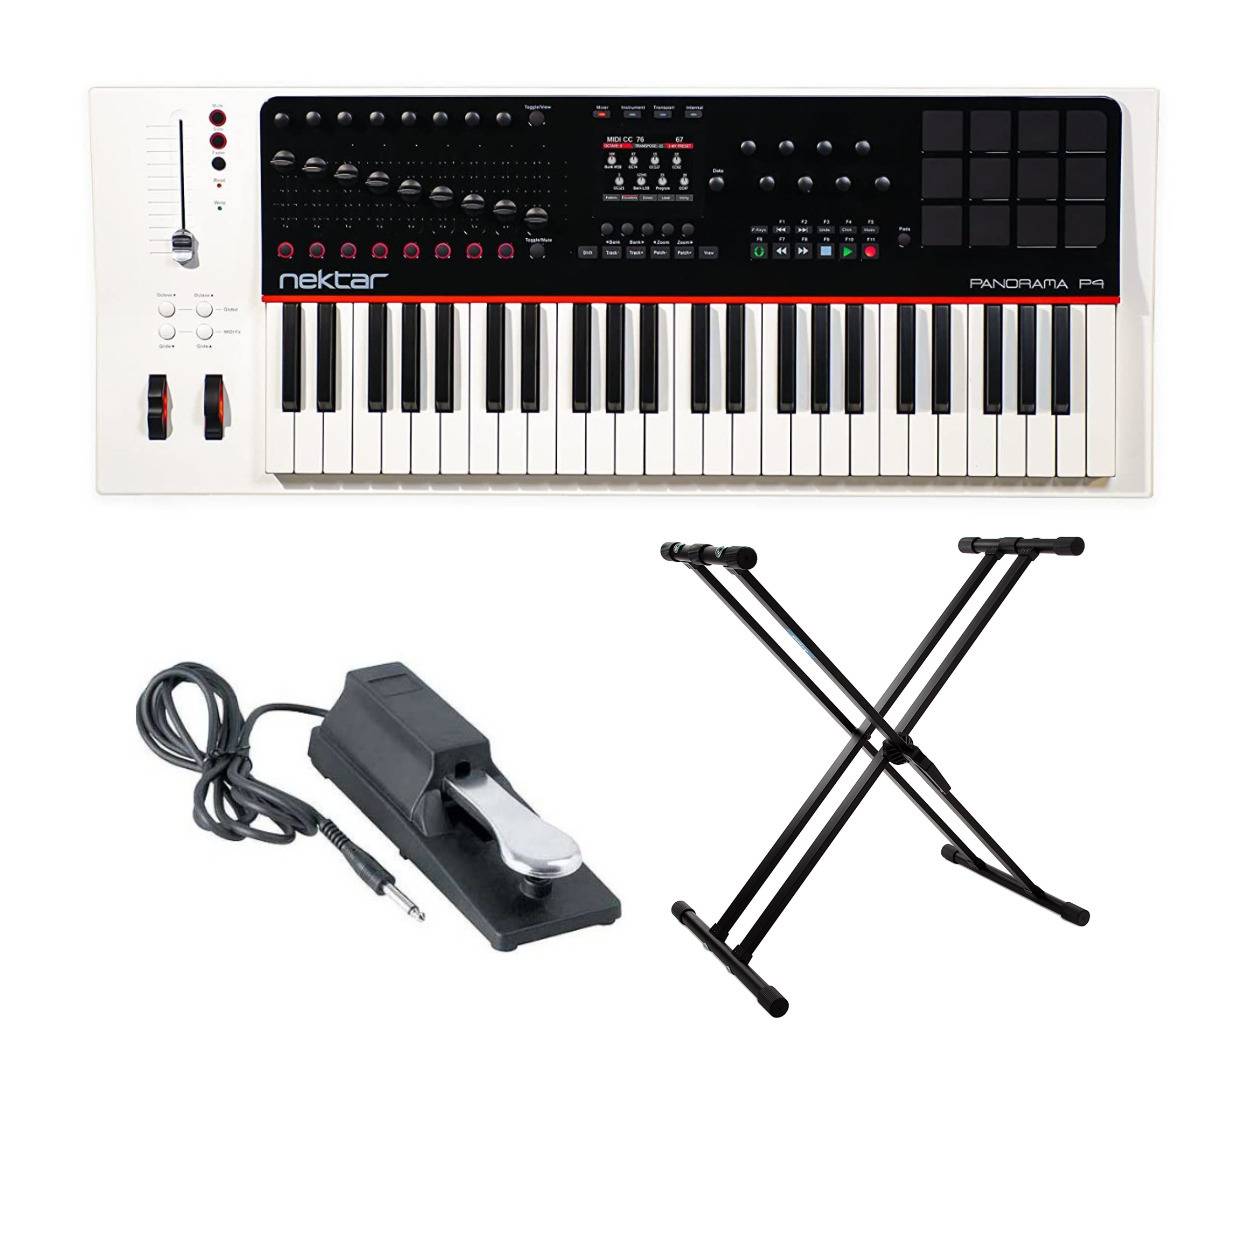 Nektar Panorama P4 49-Key USB MIDI Keyboard Controller Bundle with Keyboard Stand and Sustain Pedal